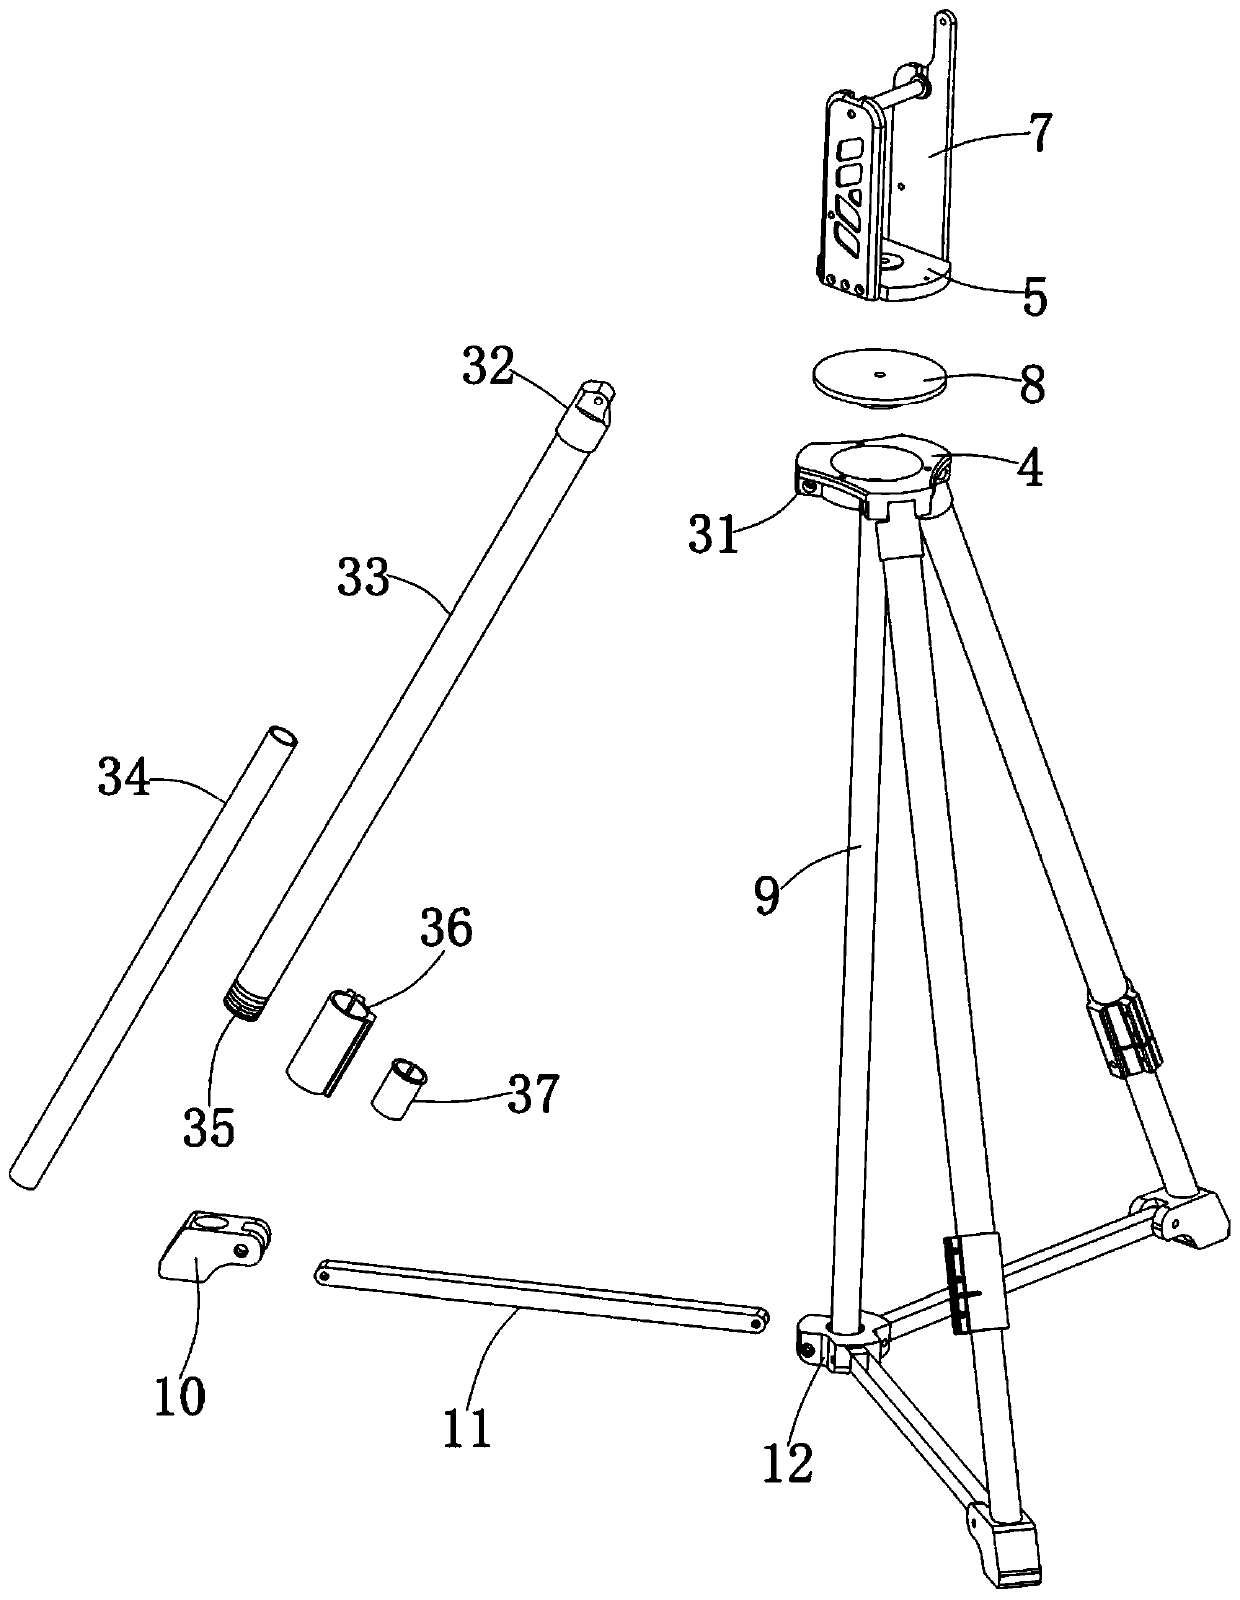 Quick-disassembly-assembly camera rocker arm